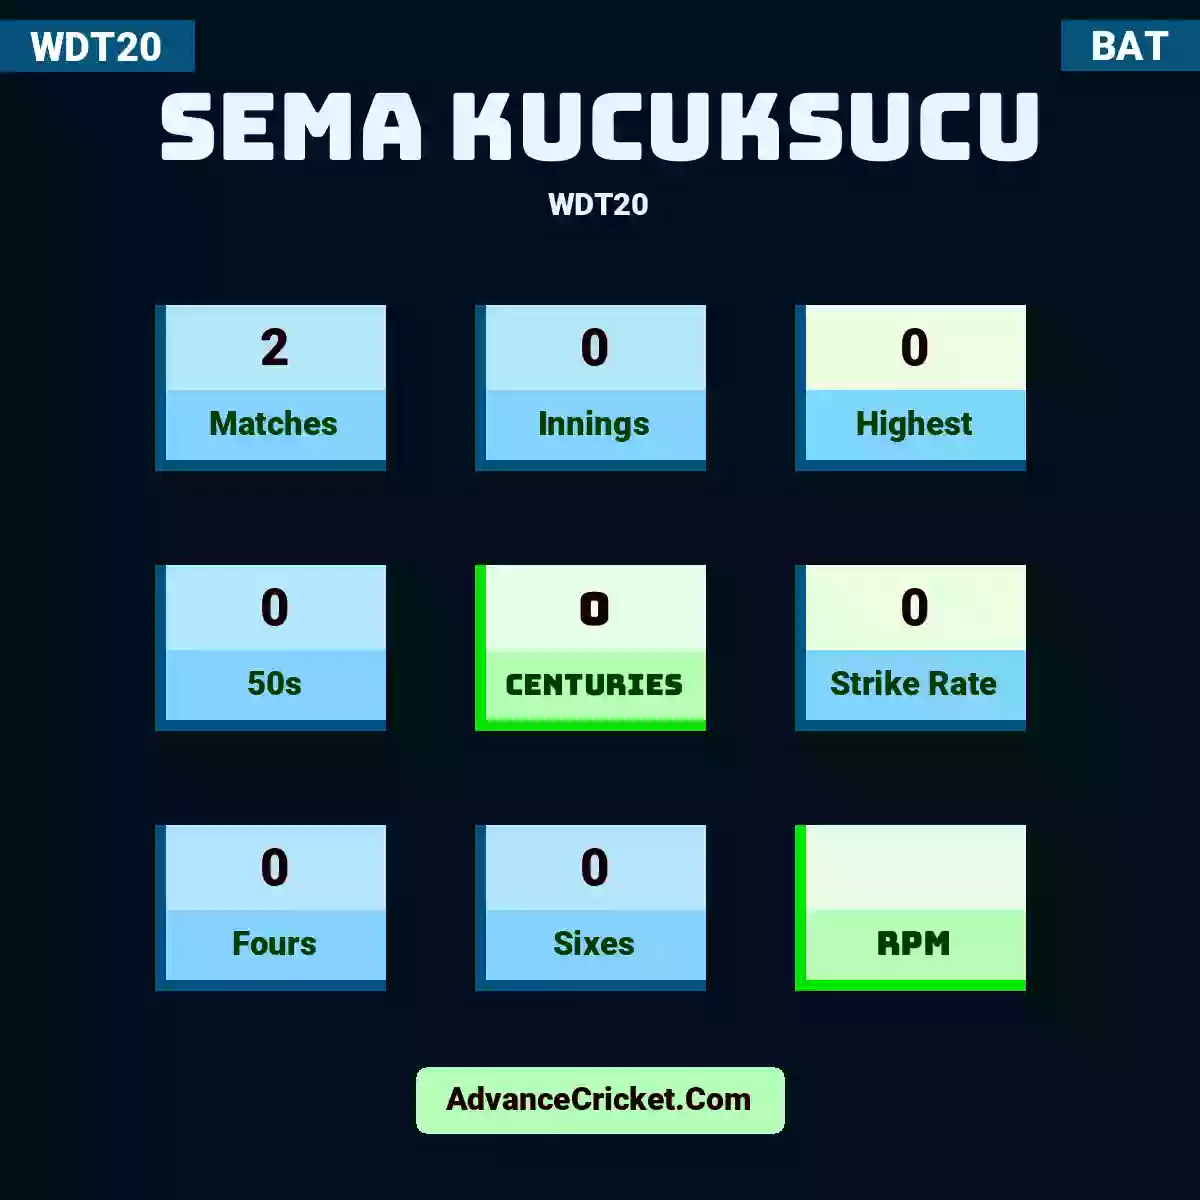 Sema Kucuksucu WDT20 , Sema Kucuksucu played 2 matches, scored 0 runs as highest, 0 half-centuries, and 0 centuries, with a strike rate of 0. S.Kucuksucu hit 0 fours and 0 sixes.